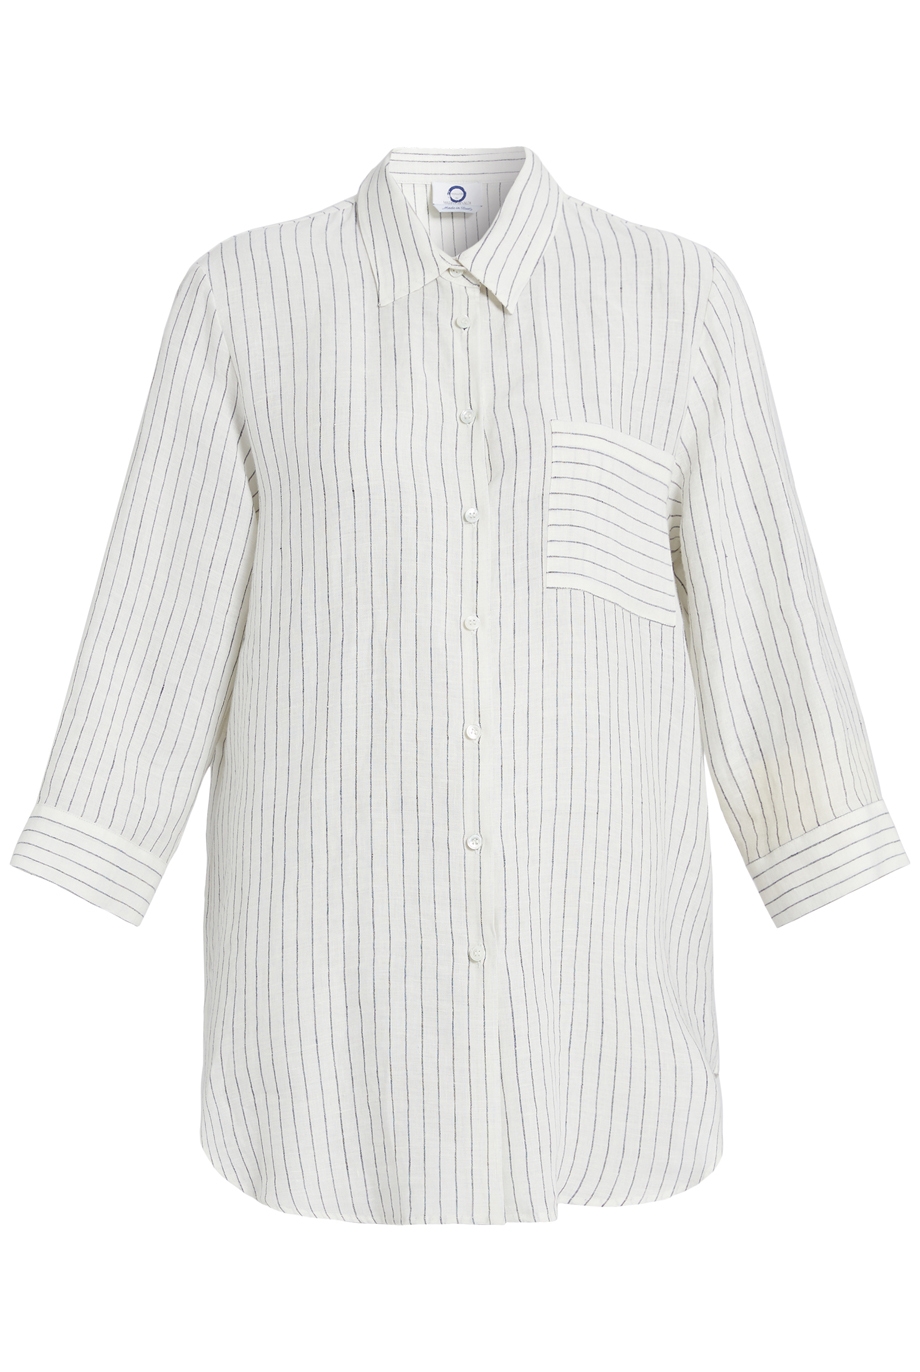 Marina Rinaldi Striped linen shirt - Harvey Nichols